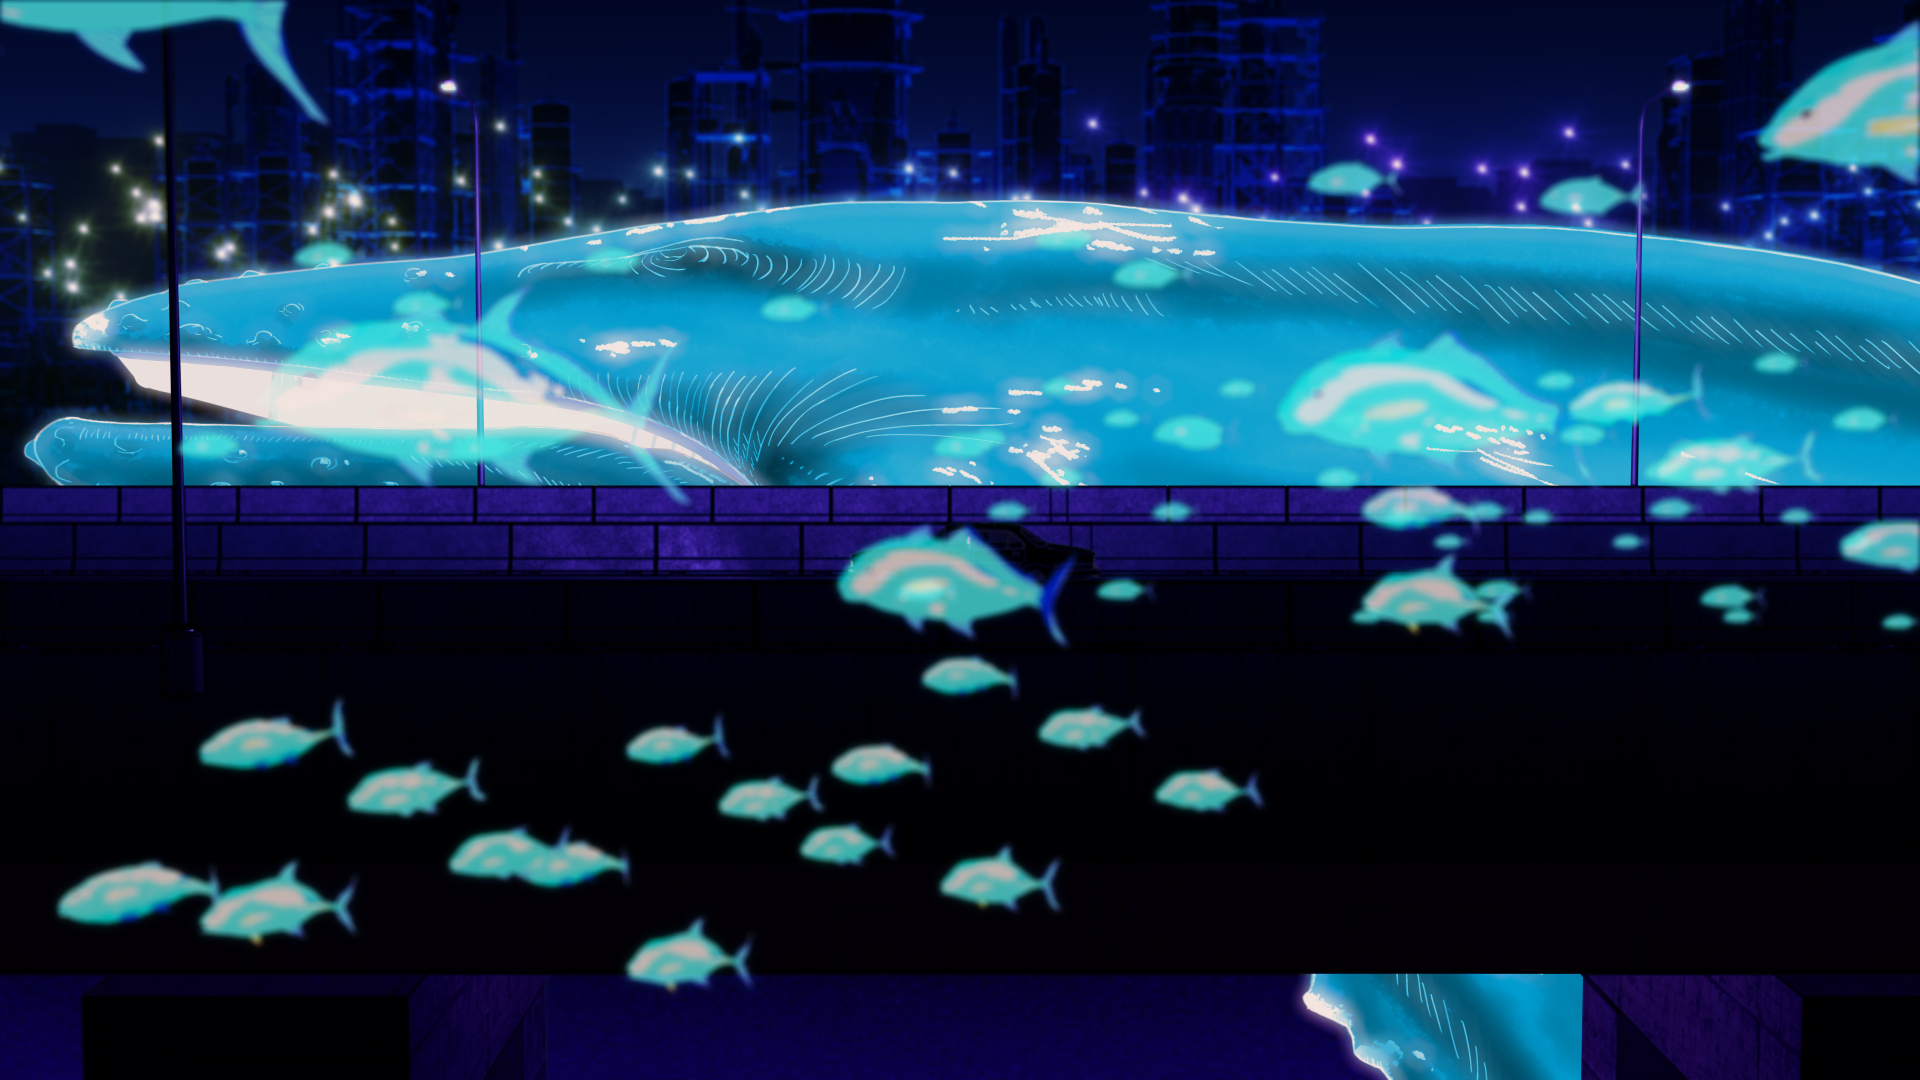 Nowisee 巨大クジラと夜の高速を走る幻想的な ハードボイルド のミュージックビデオを公開 アニメ系情報 あにまっぷニュース